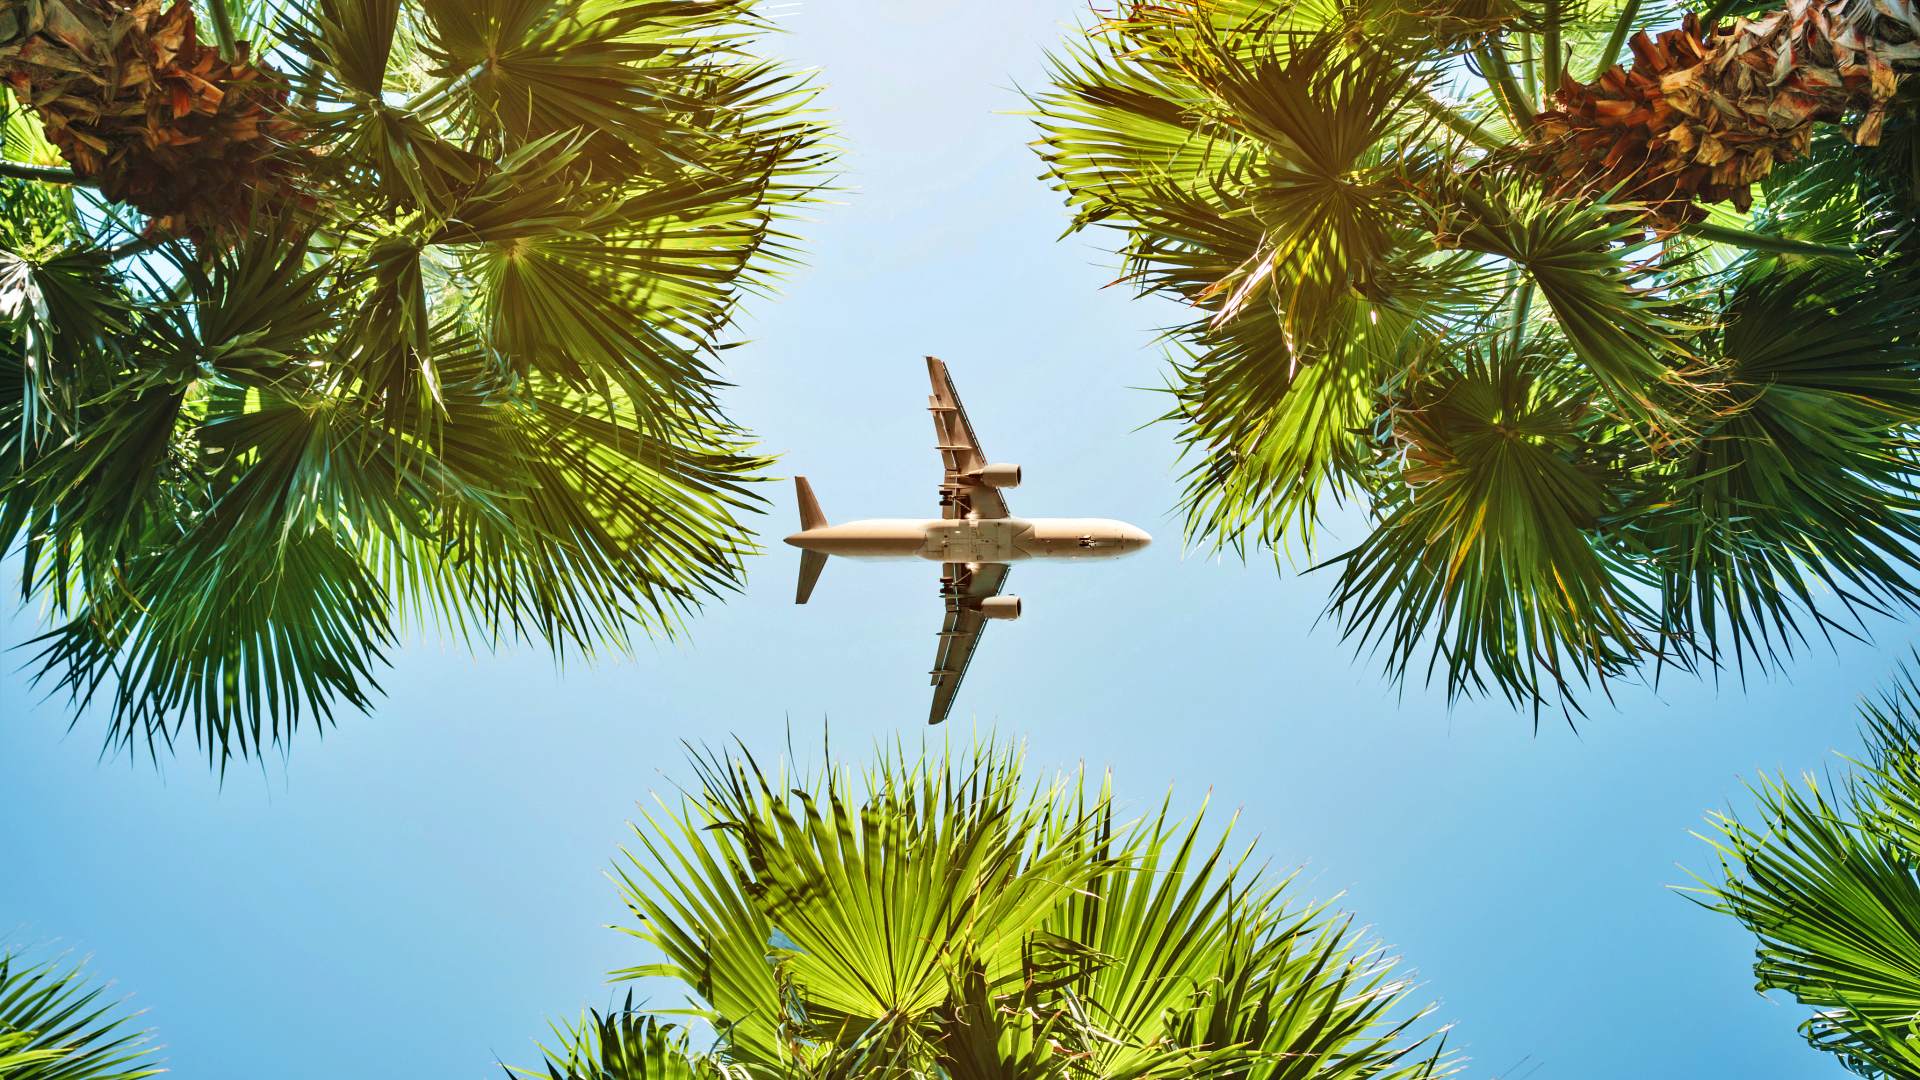 Flüge nach Almería - Flugzeug im Landeanflug über Palmen